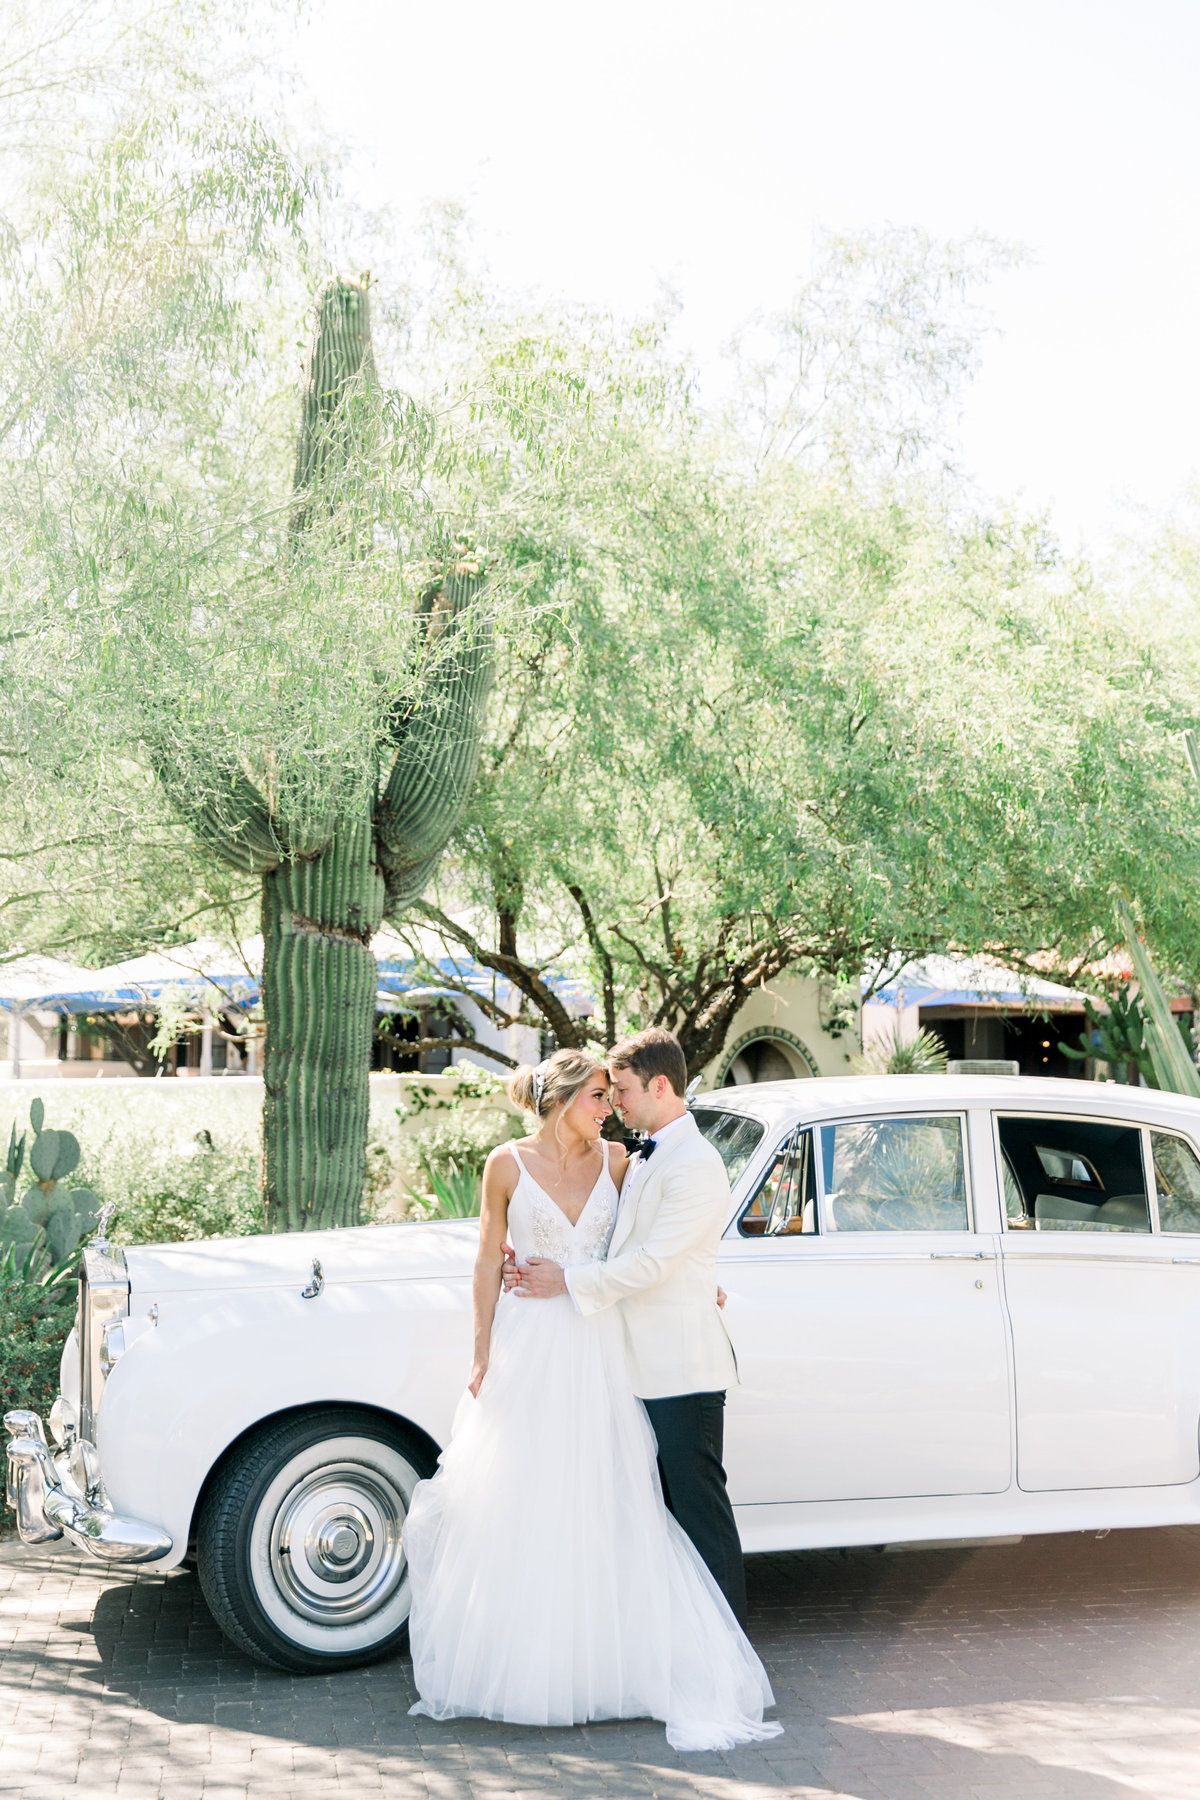 Karlie Colleen Photography - El Chorro Arizona Desert Wedding - Kylie & Doug-302